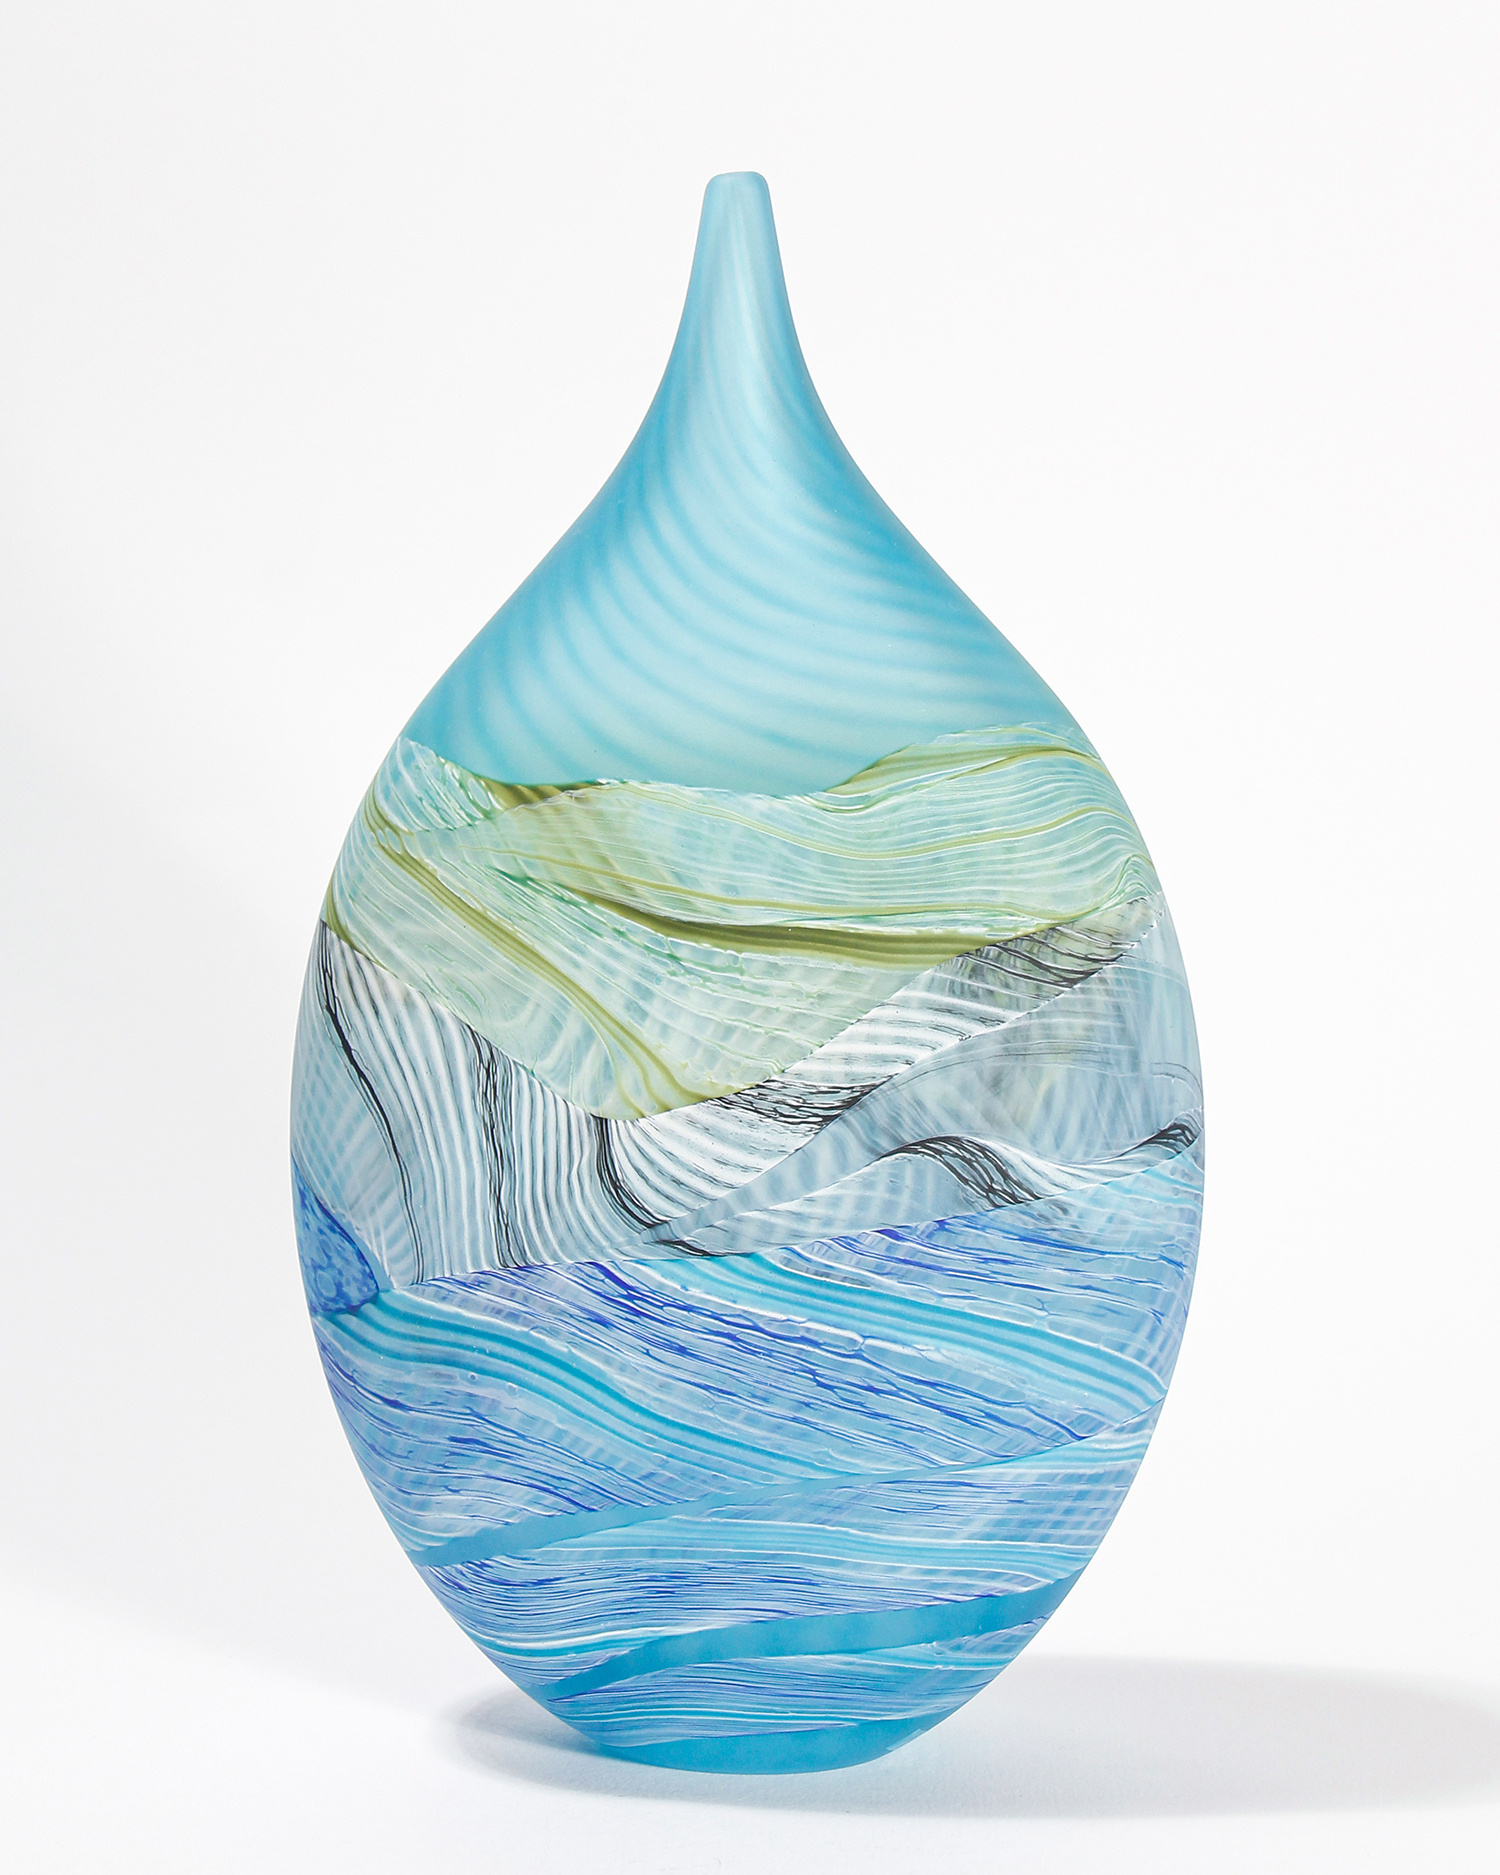 Spring Tides Teardrop Vase, small by Thomas Petit